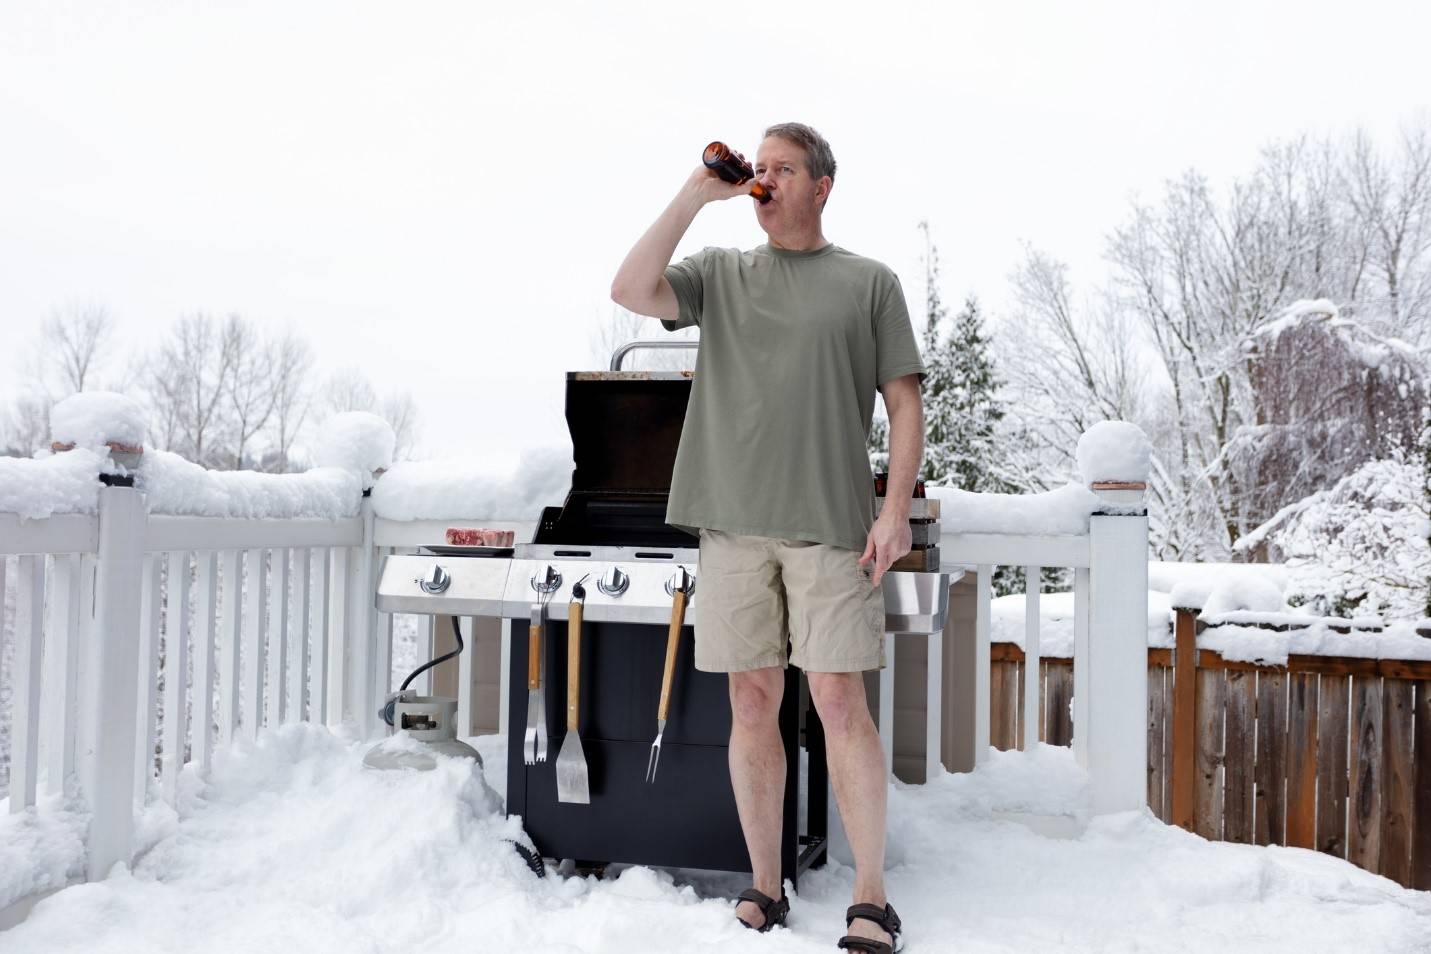 Can an outdoor refrigerator run during winter?
                    